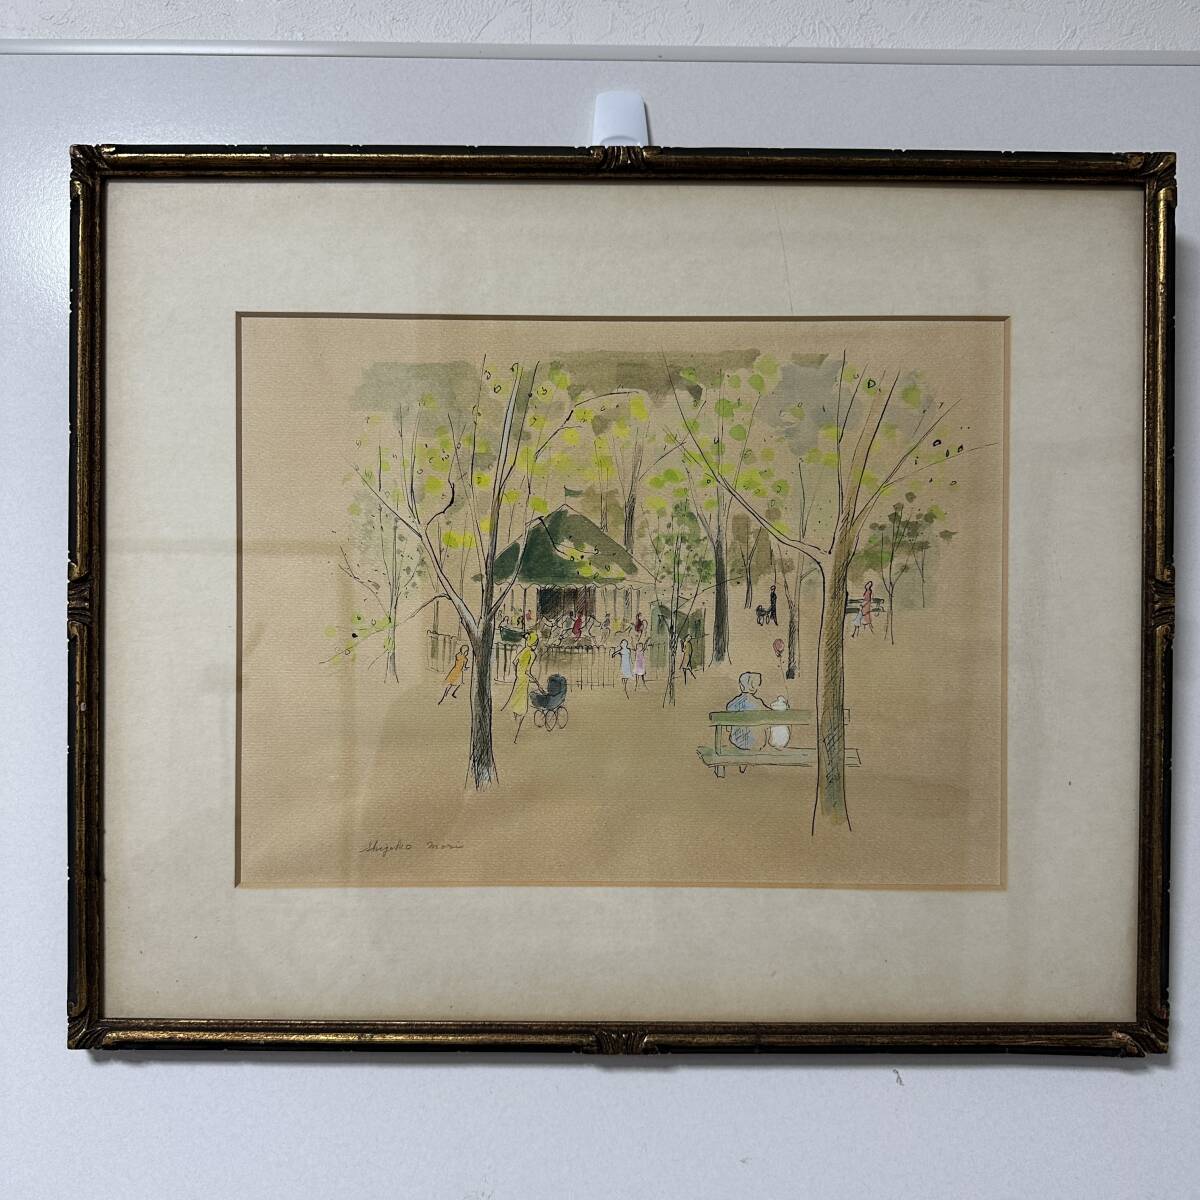 [Auténtico] Pintura de paisaje de Shigeko Mori Pintura de acuarela Tamaño 35 cm x 26 cm (RA-005), Cuadro, acuarela, Naturaleza, Pintura de paisaje